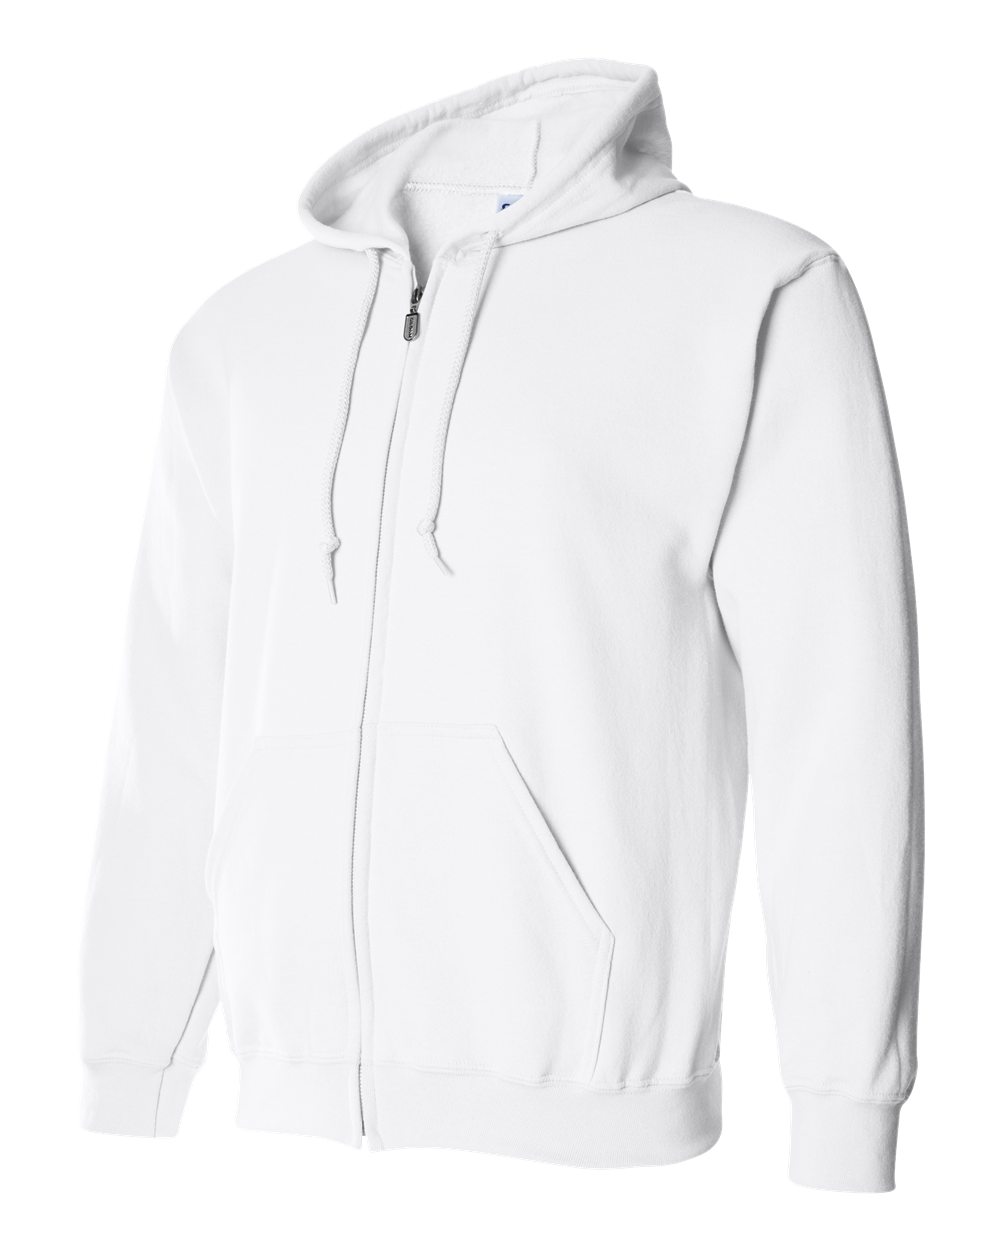 Heavy Blend™ Full-Zip Hooded Sweatshirt